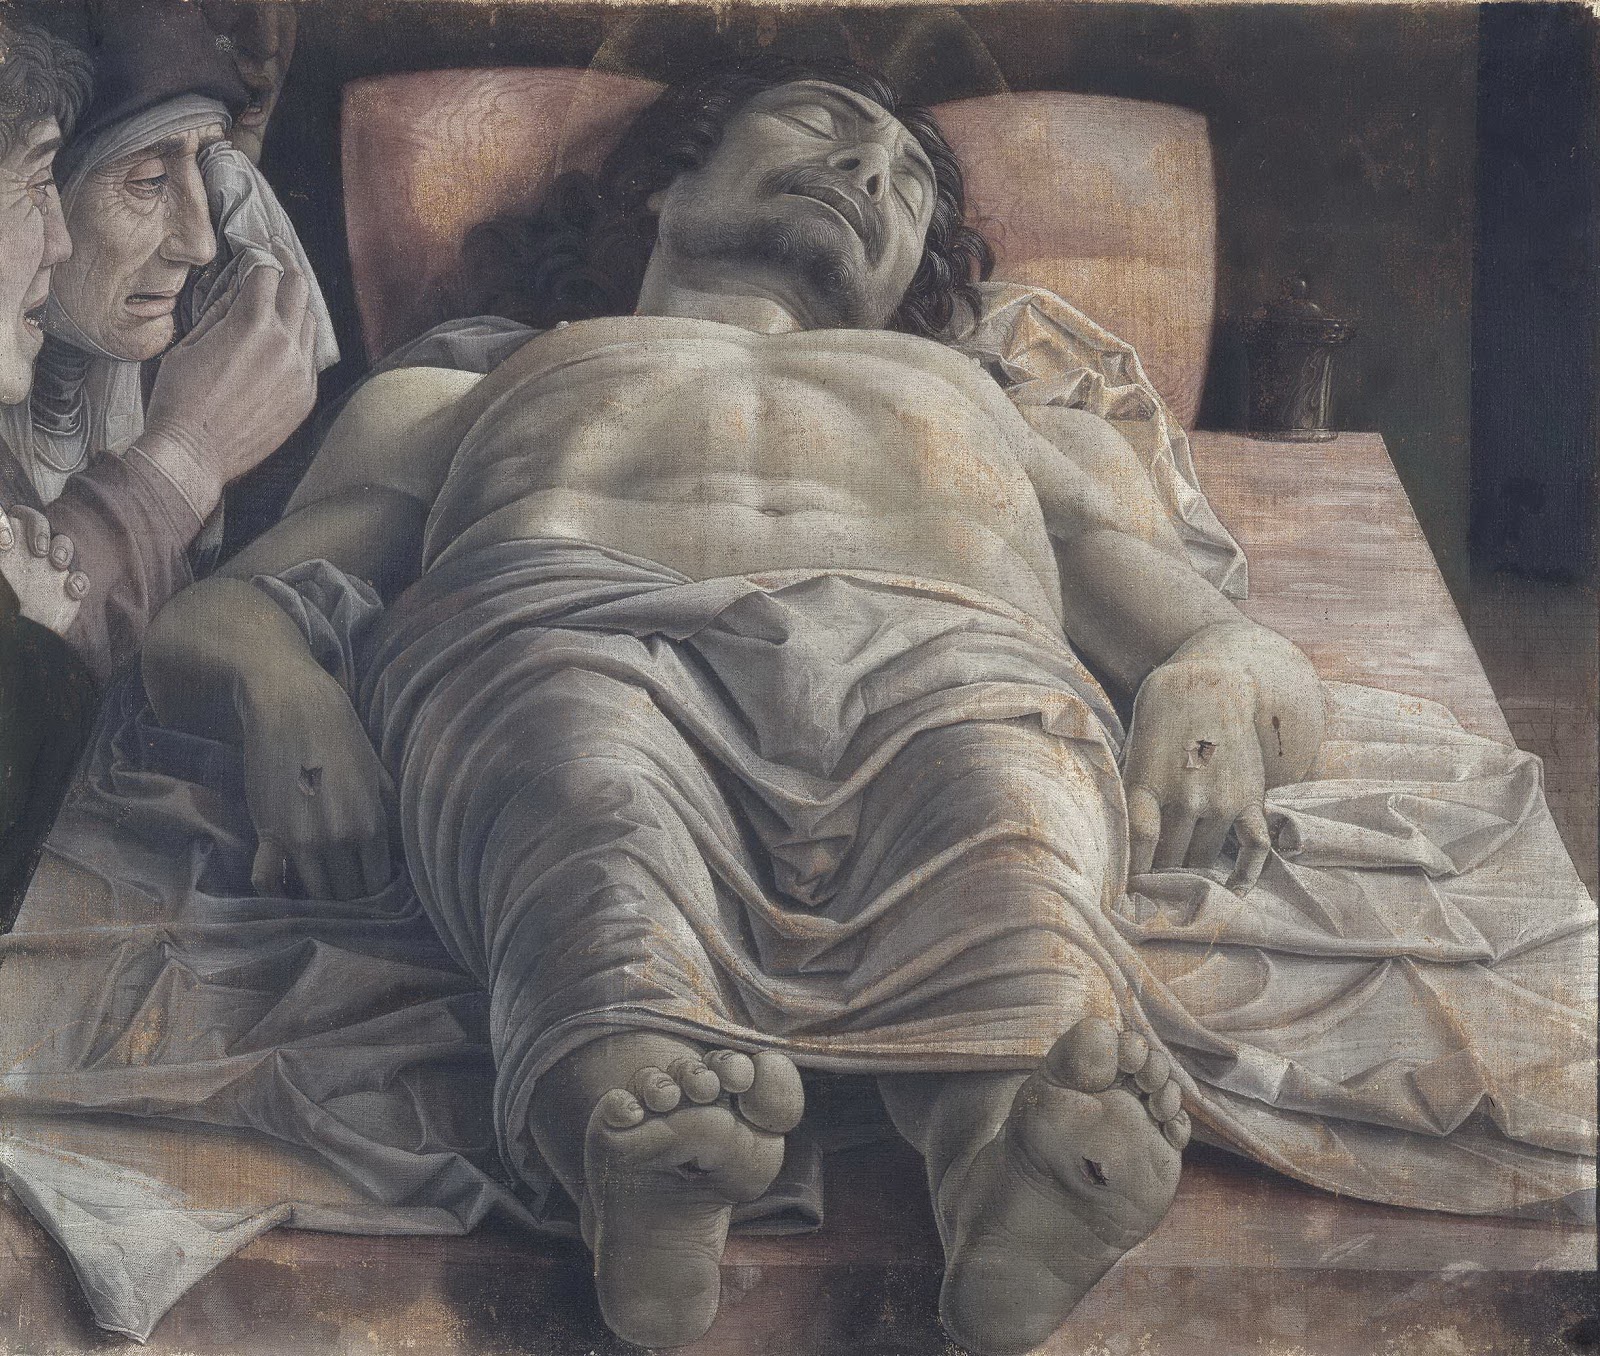 Andrea+Mantegna-1431-1506 (96).jpg